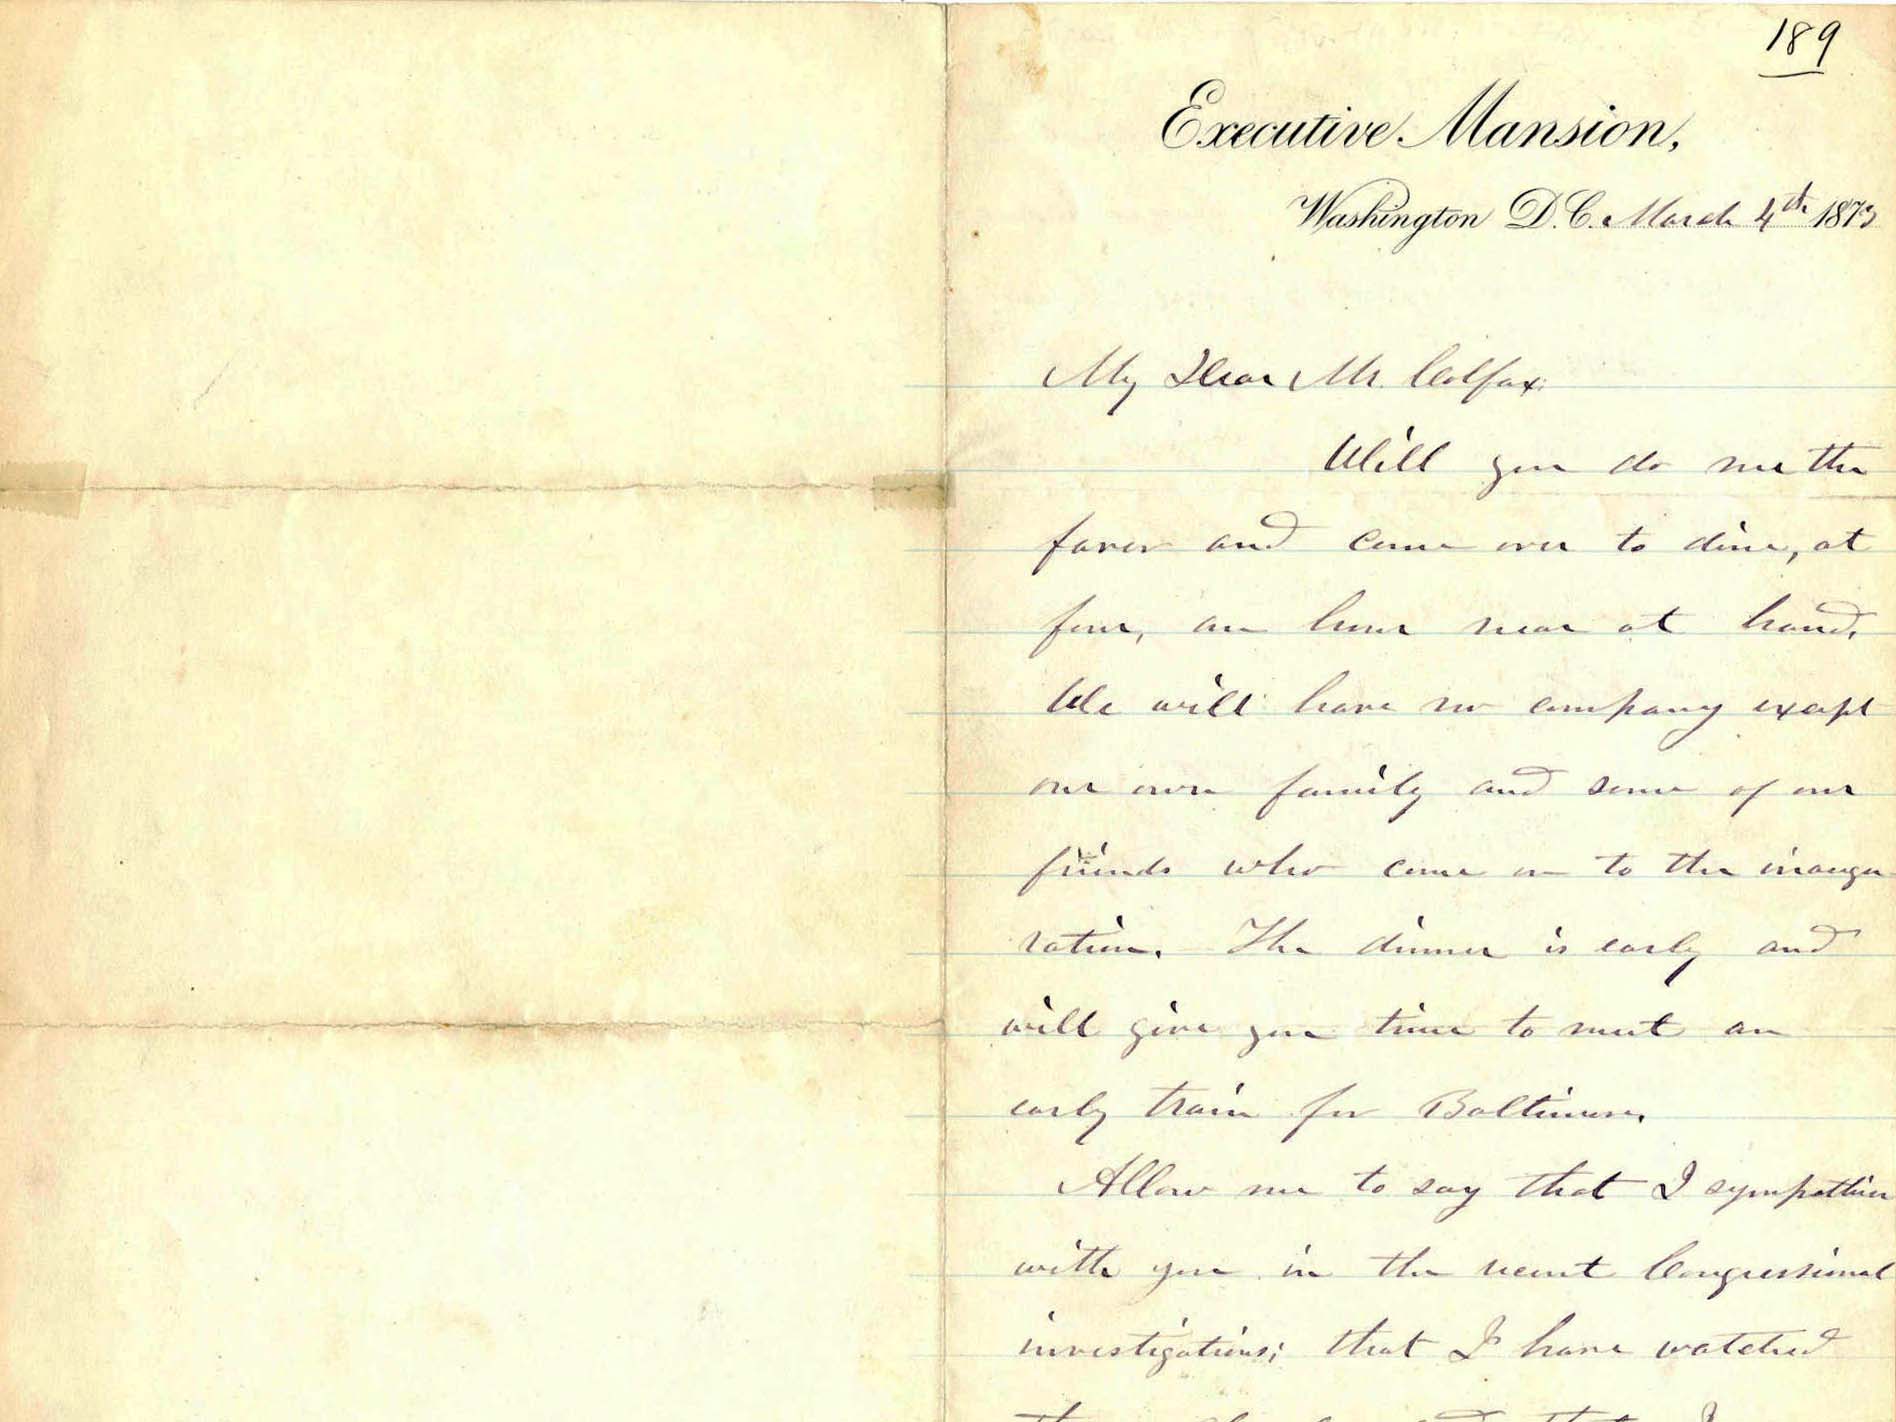 Ulysses S. Grant Letter t...